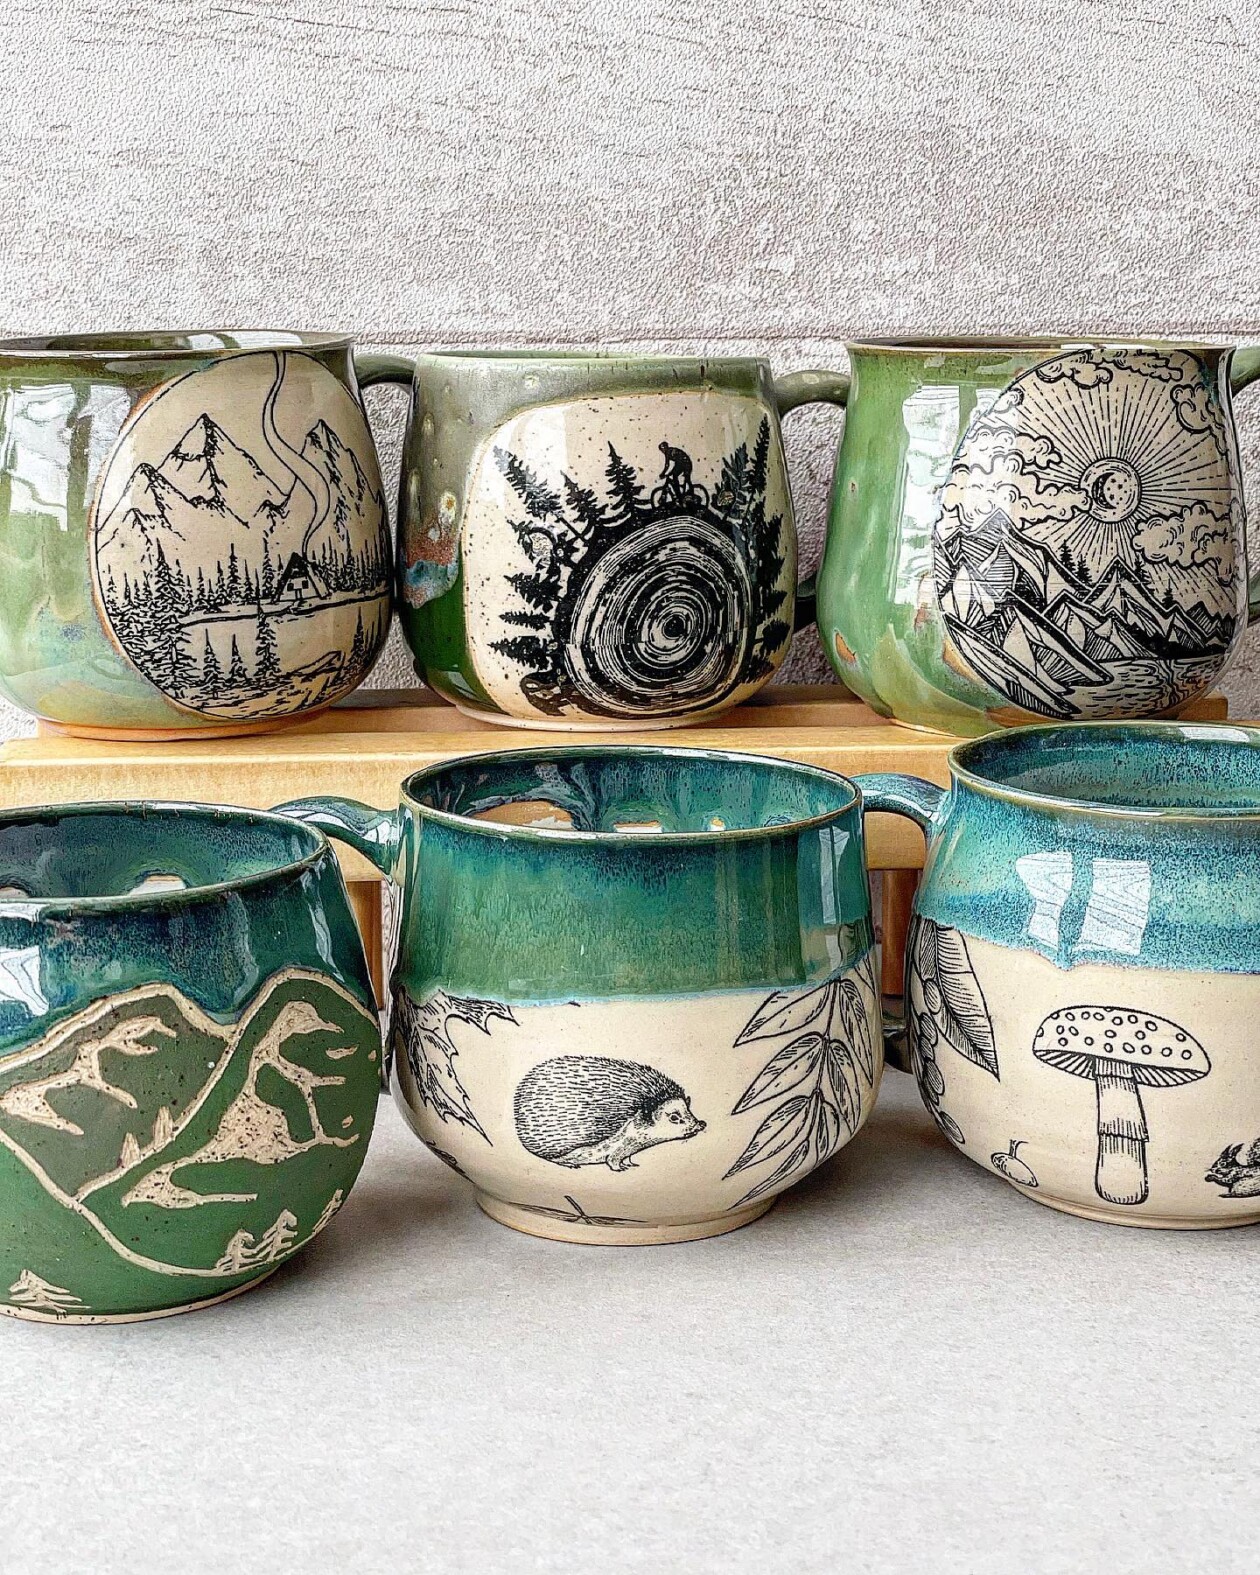 Ceramics With Vintage Motifs By Joanna Dylowska (10)